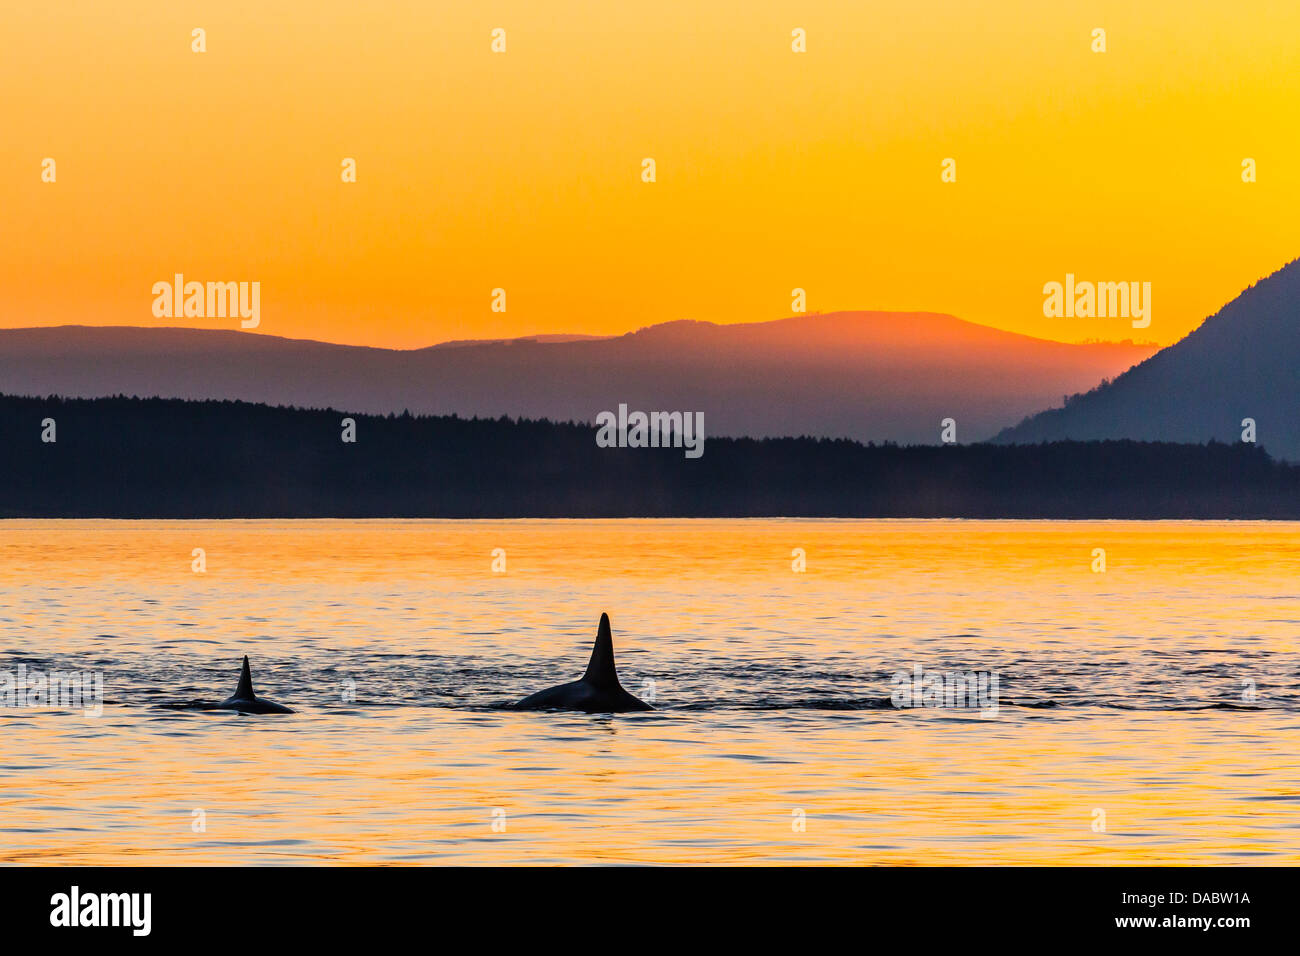 Transient killer whales (Orcinus orca) surfacing at sunset, Haro Strait, Saturna Island, British Columbia, Canada, North America Stock Photo